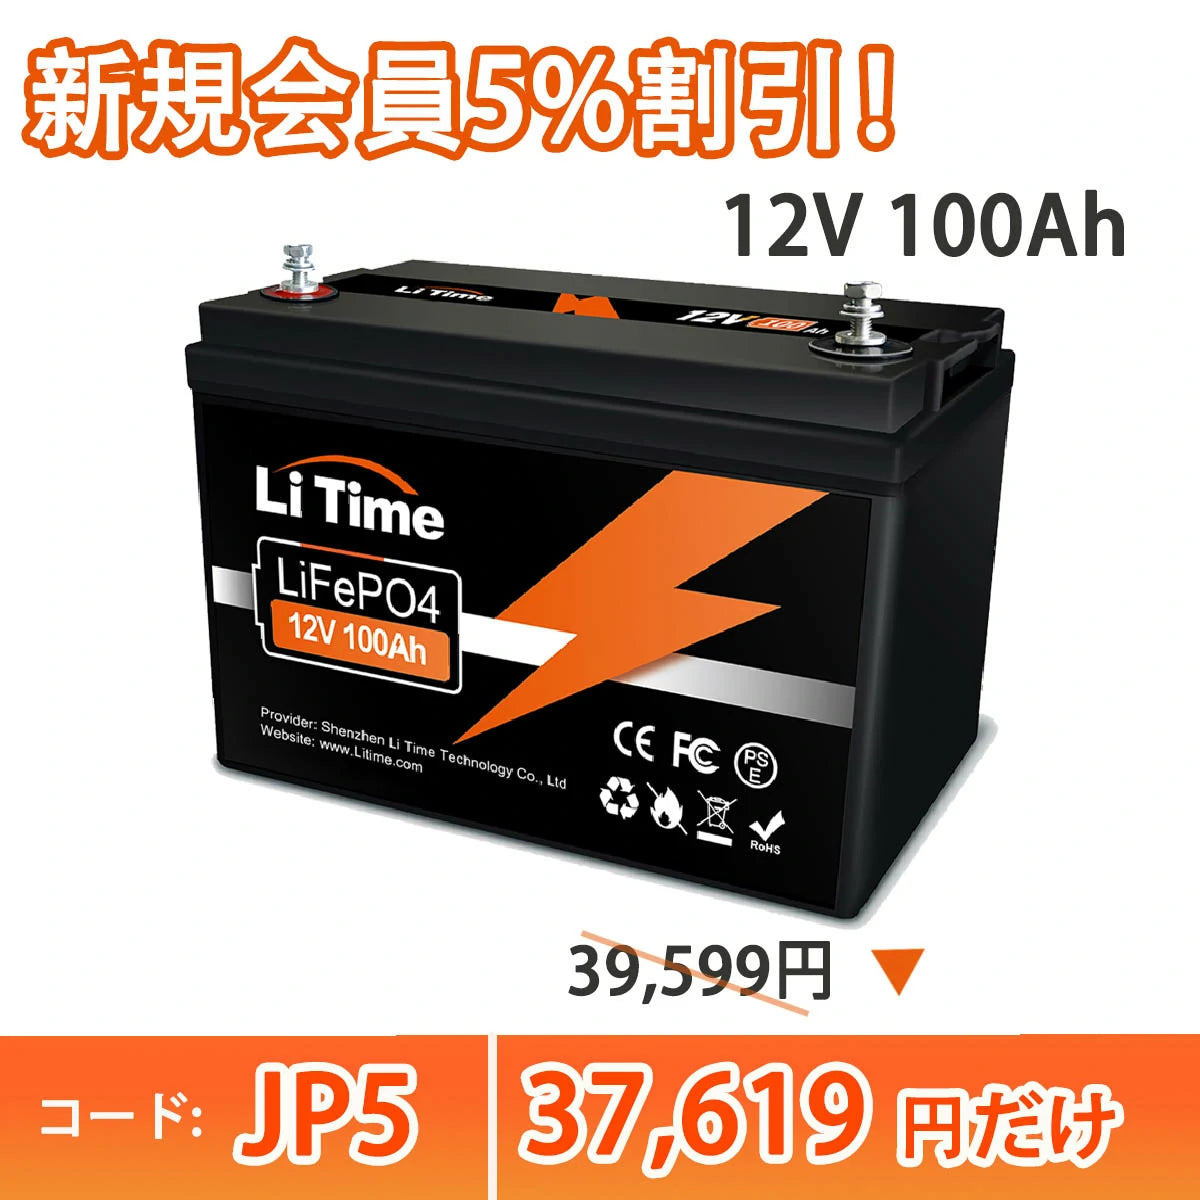 LiTime 12V 100Ah LiFePO4 リン酸鉄リチウムイオンバッテリー 内蔵100A BMS - LiTime-JP